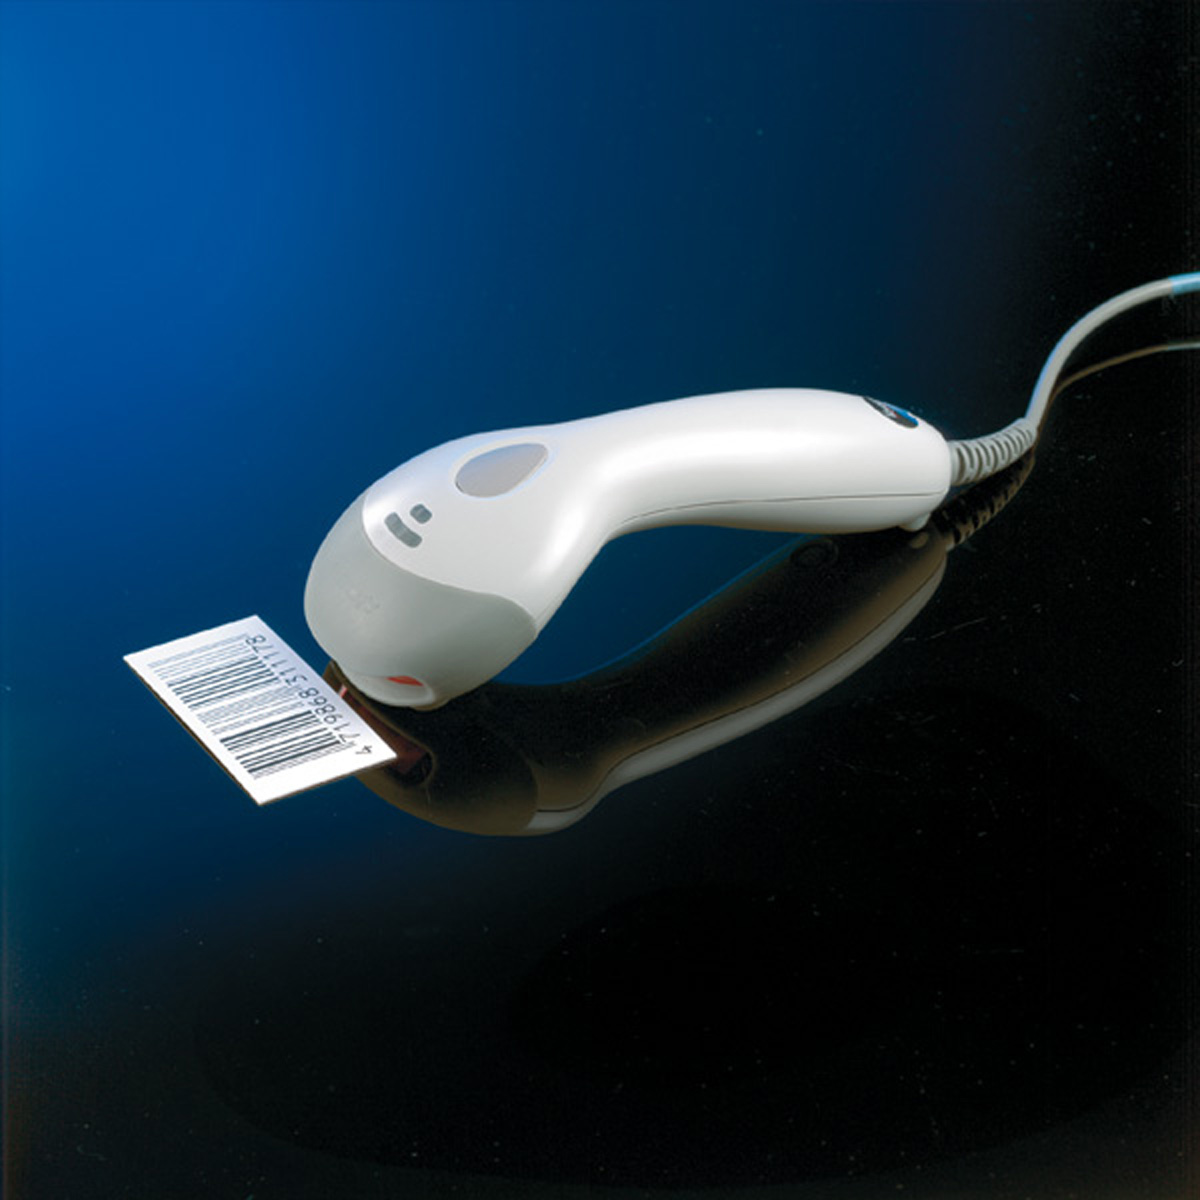 HONEYWELL 9540 Voyager Laser Scanner, USB